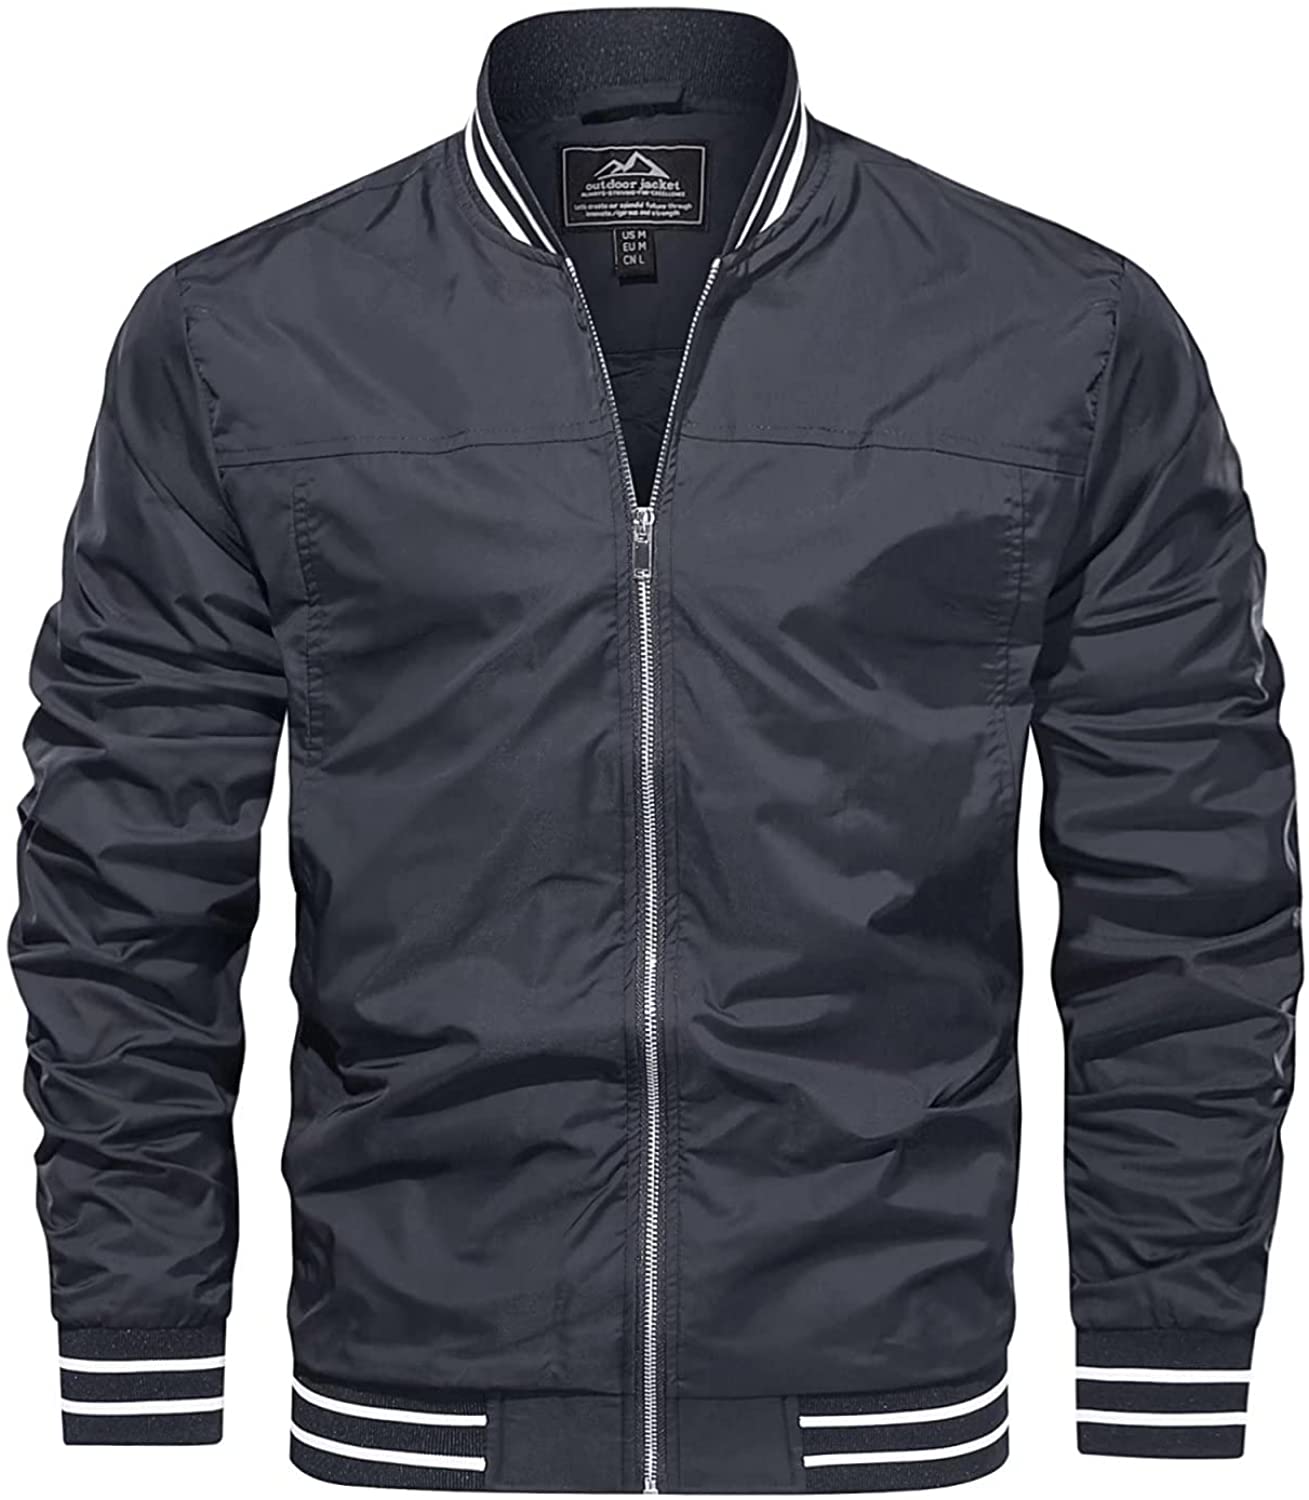 Buy MAGCOMSEN Men's Jacket Lightweight Bomber Jacket Casual Windbreaker  Jackets Windproof Zip Up Coats with 5 Pockets, Khaki, Small at